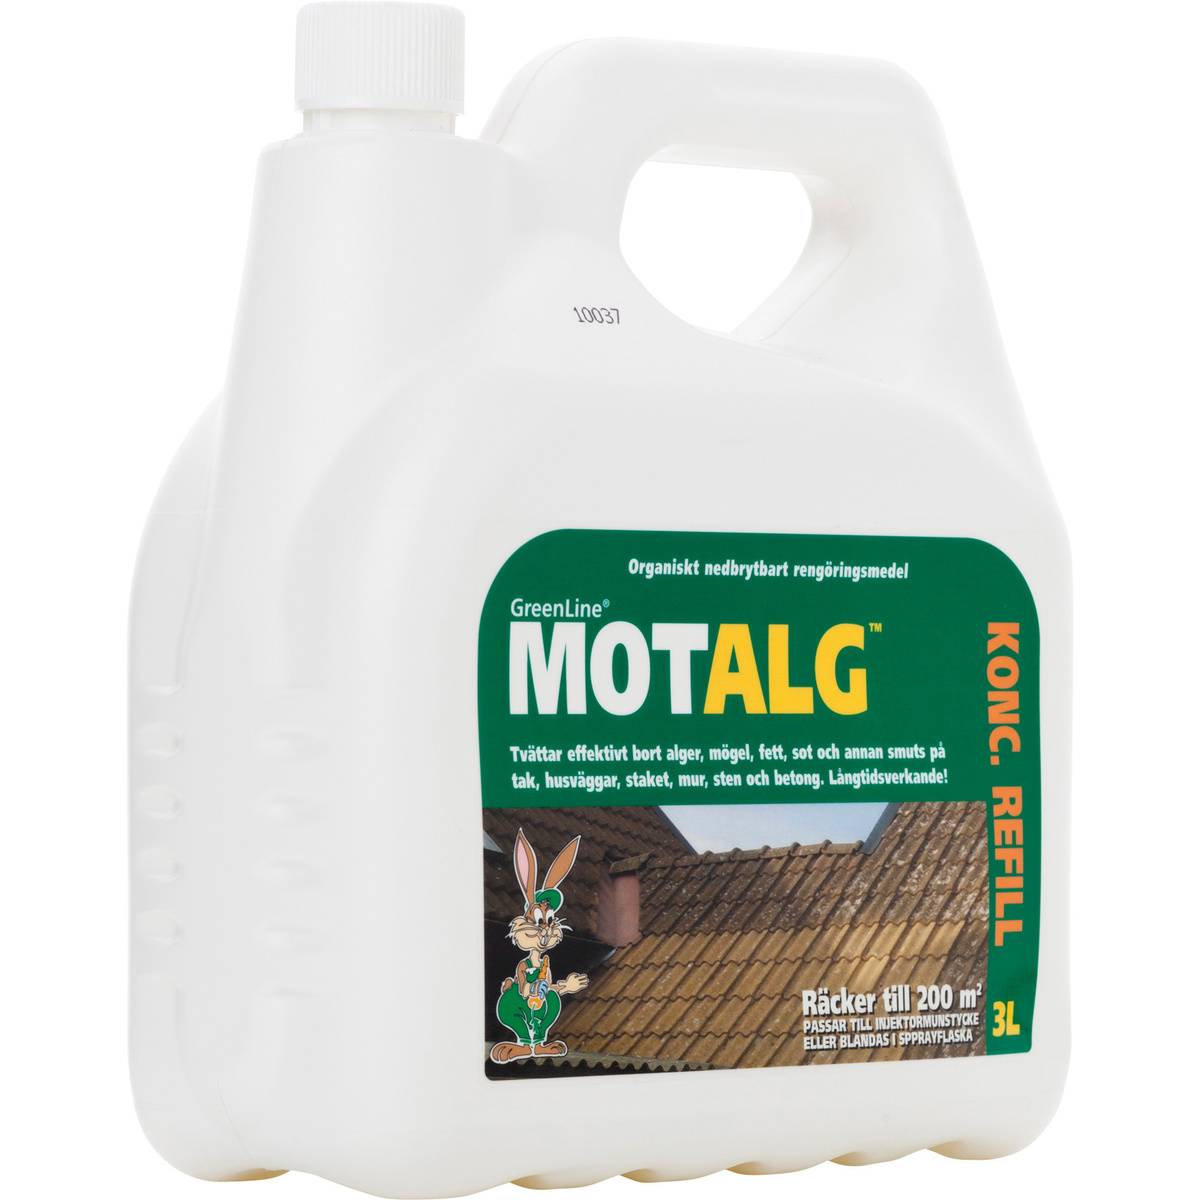 MotAlg refill 3 liter koncentrat